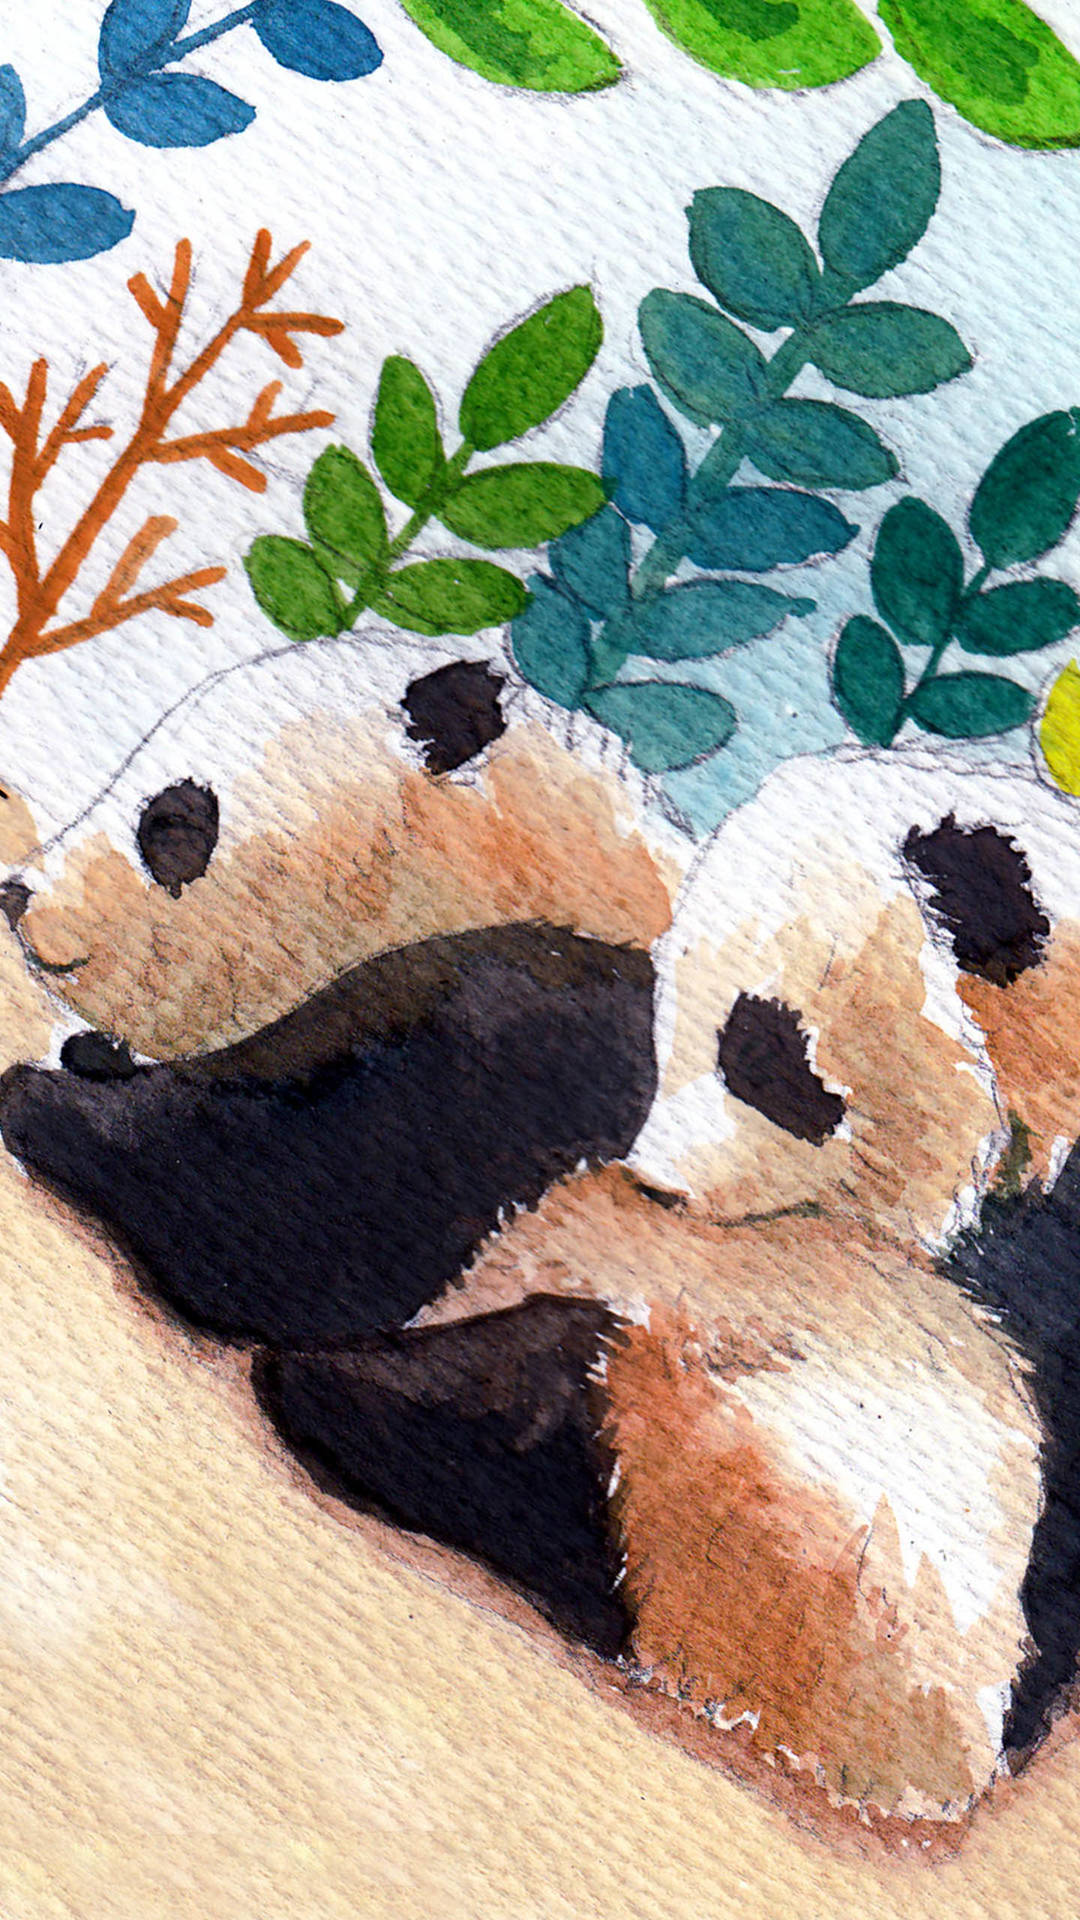 panda wallpaper iphone,panda,bear,pattern,red panda,carnivore